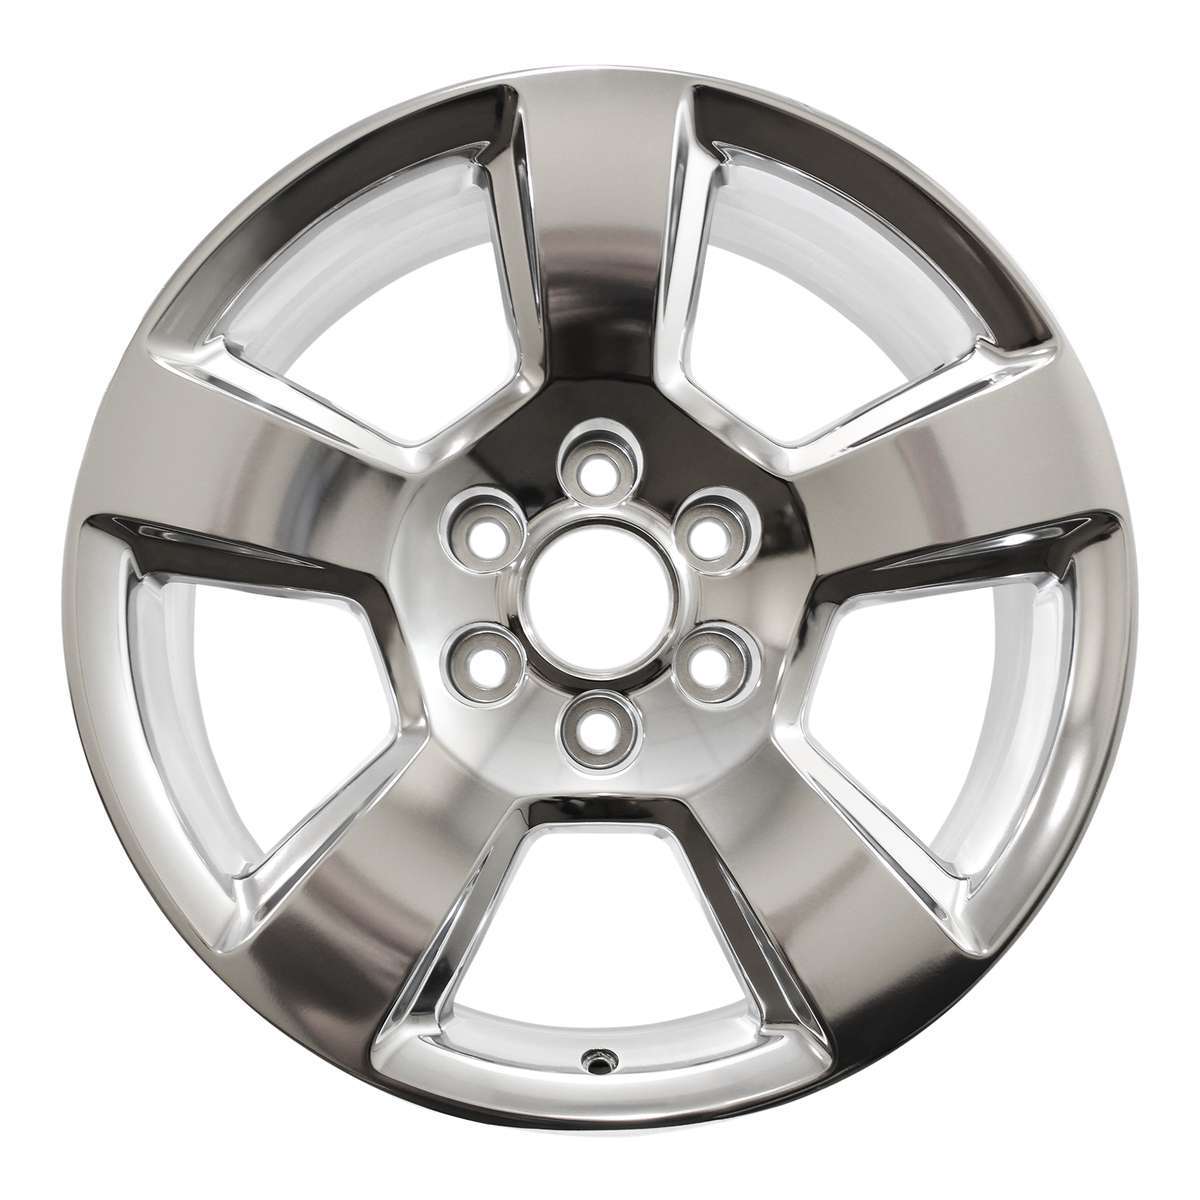 2014 Chevrolet Silverado 1500 New 20" Replacement Wheel Rim RW5652P